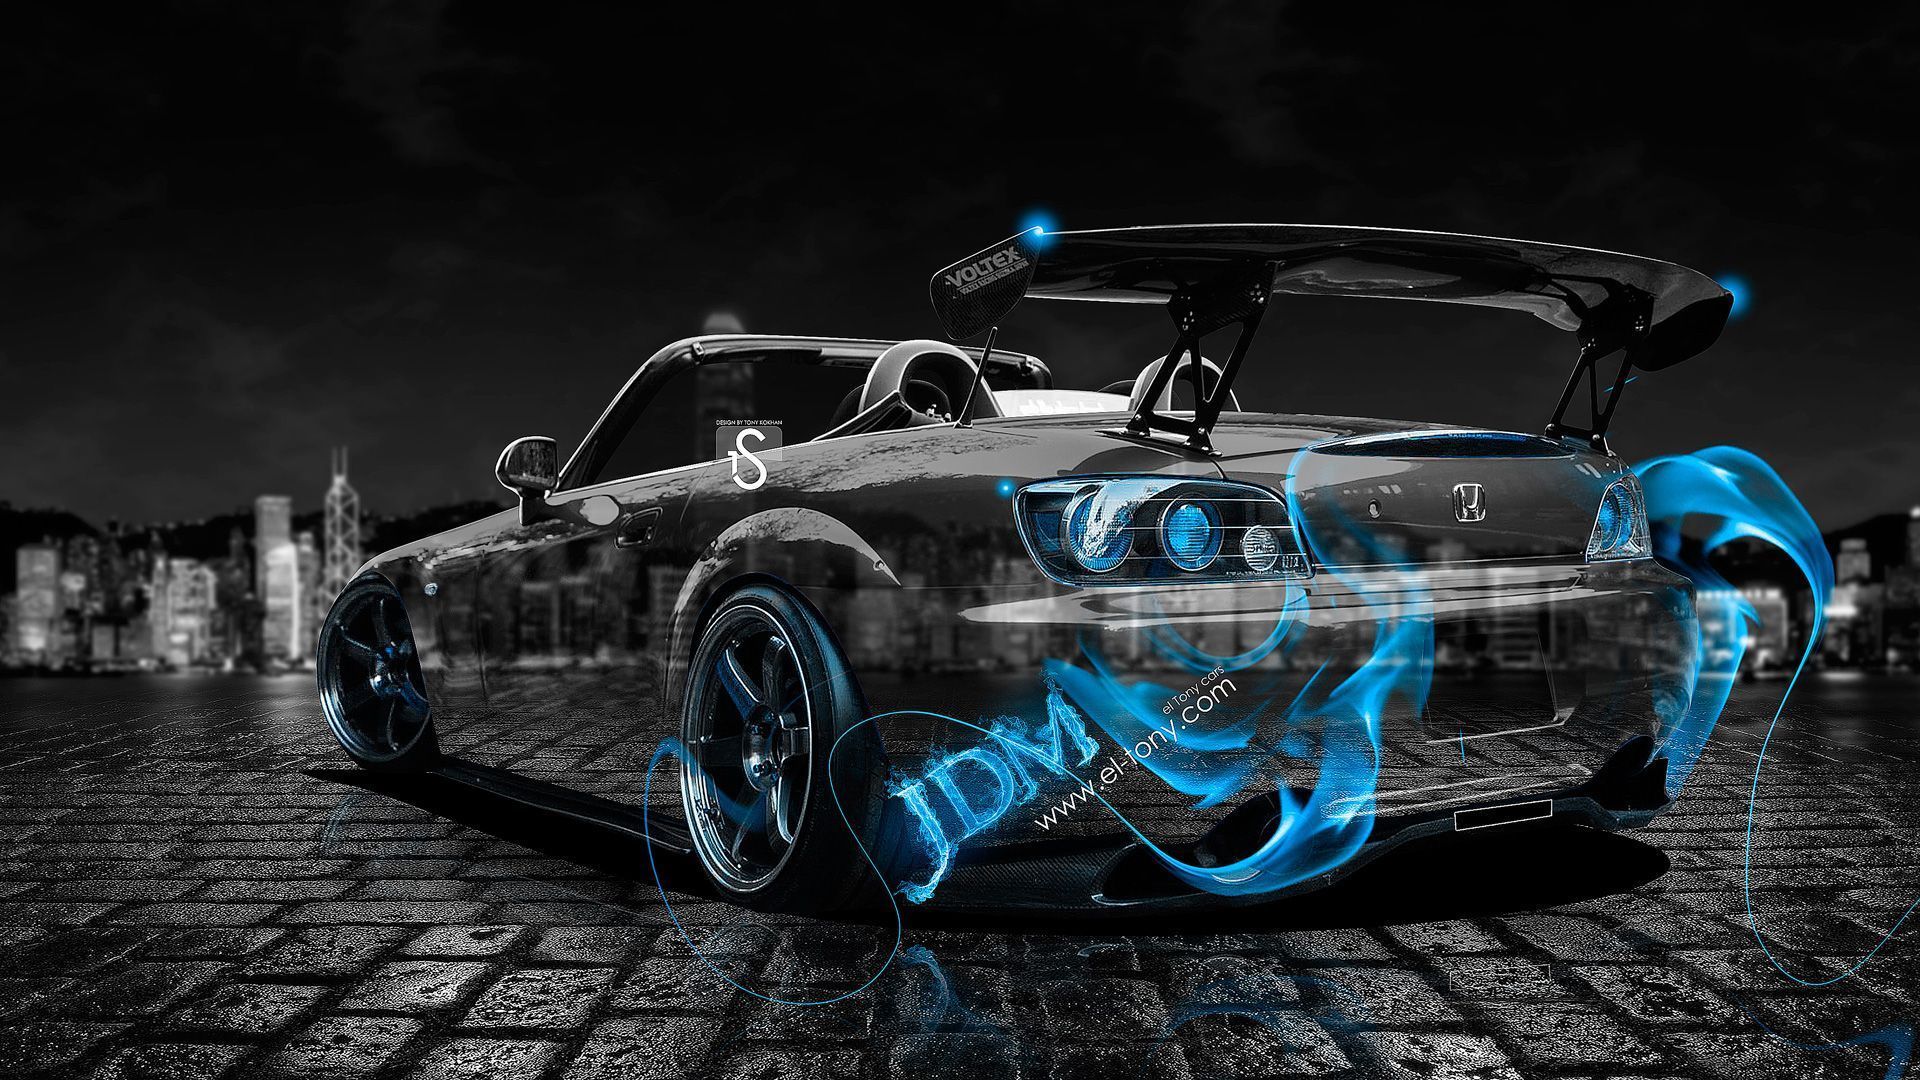 Honda-S2000-JDM-Blue-Fire-Crystal-Car-2013-HD-Wallpapers-design-by-Tony-Kokhan-www.el-tony.com_.jpg